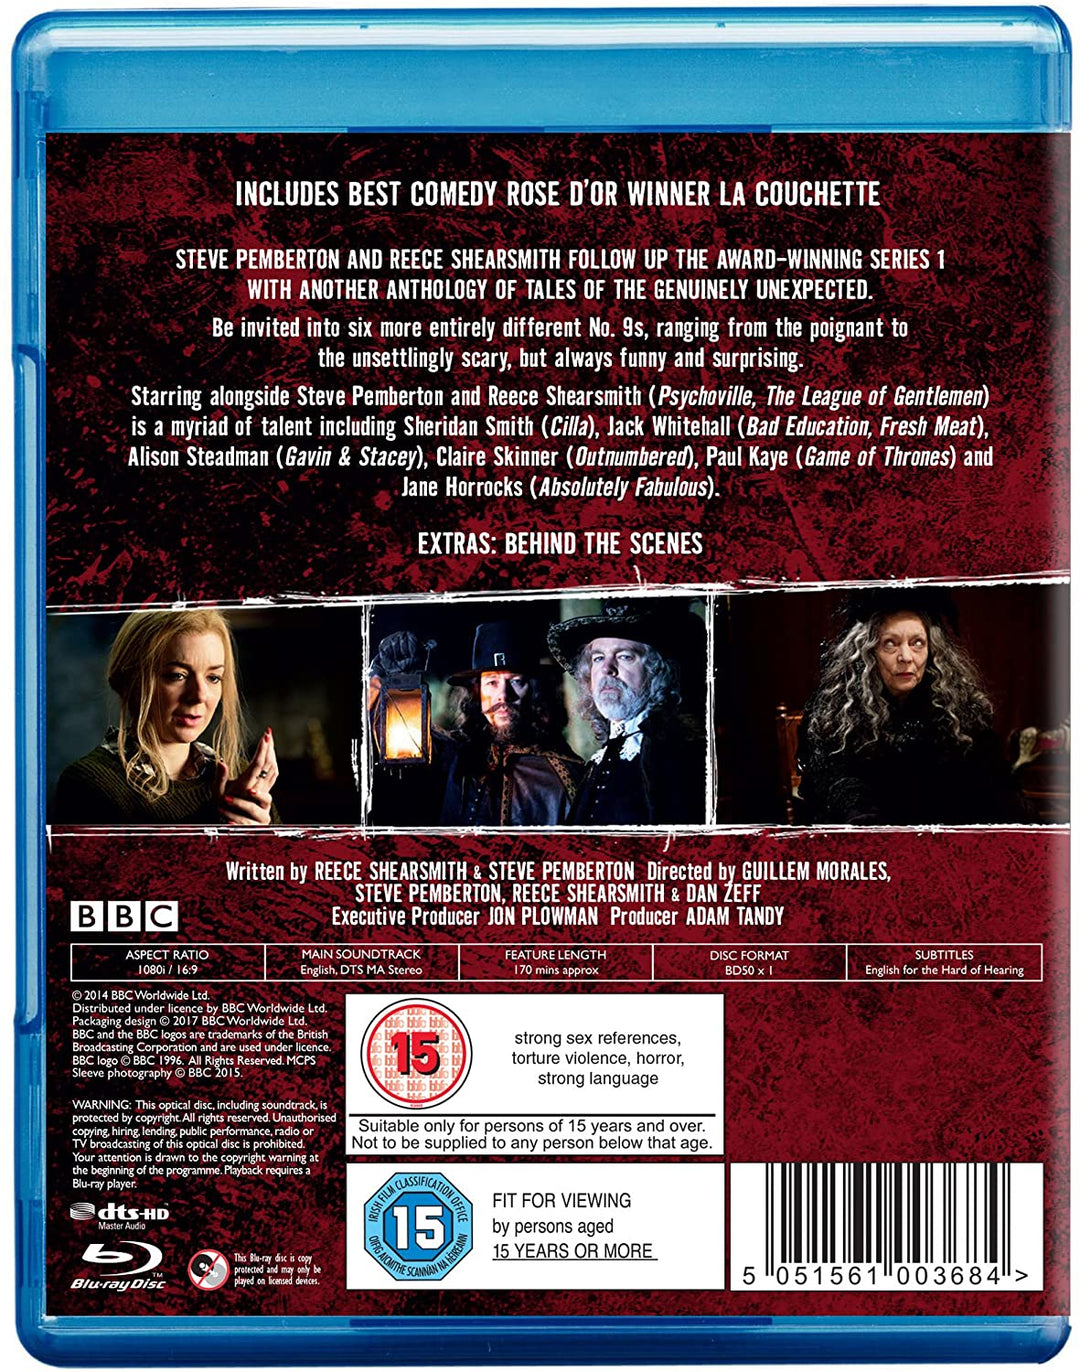 Inside No 9 - Series 2 [Blu-ray] [2017]